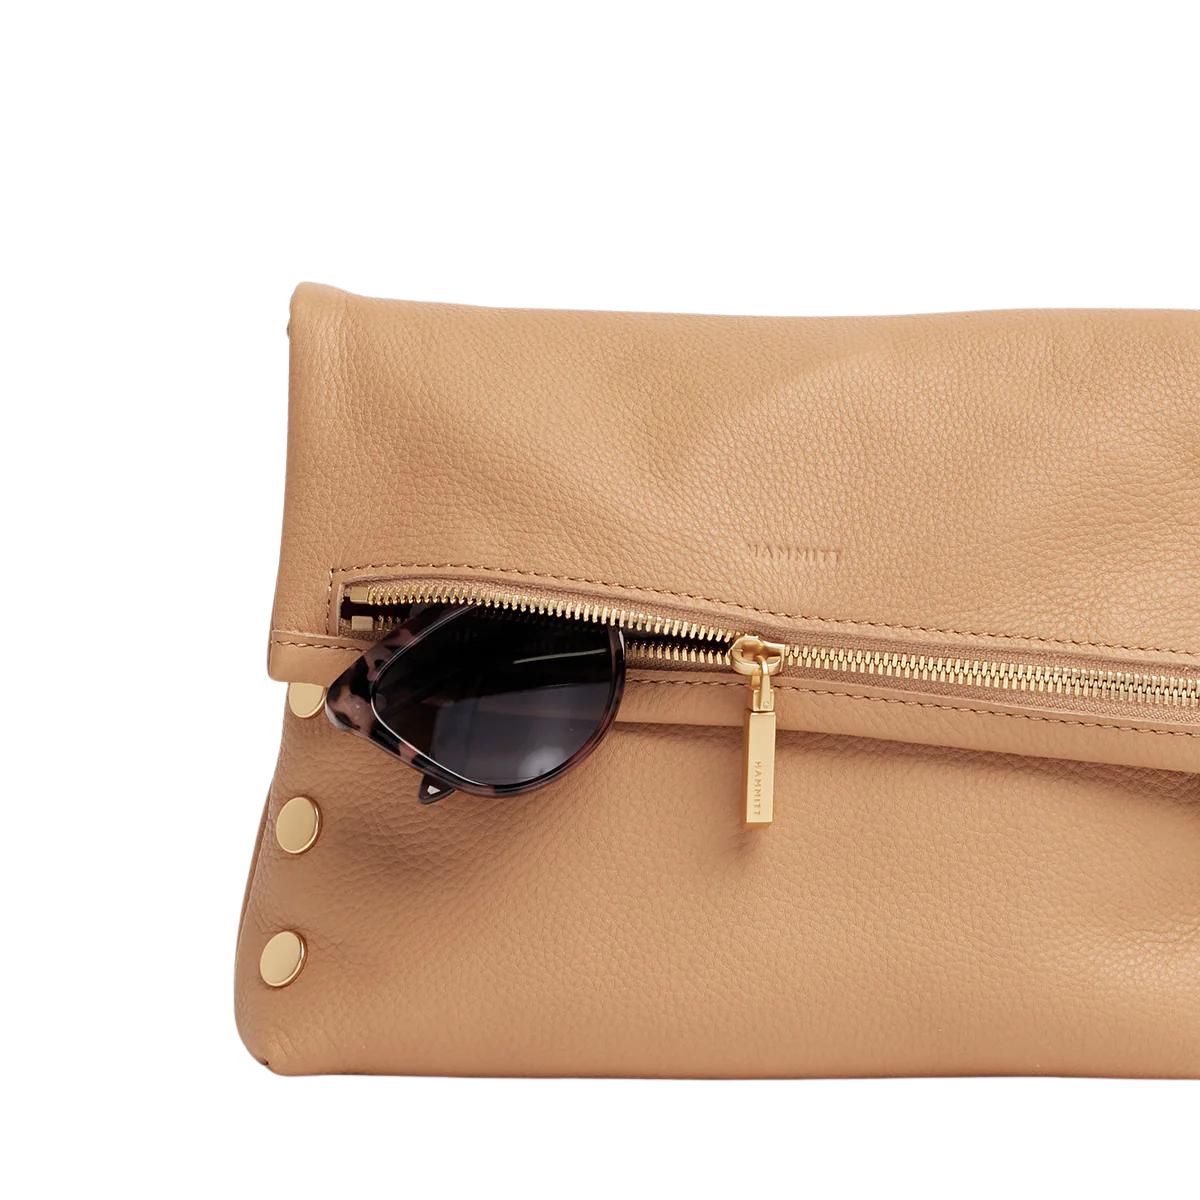 Hammitt VIP Medium Crossbody Clutch Handbag in Toast Tan with Brushed Gold